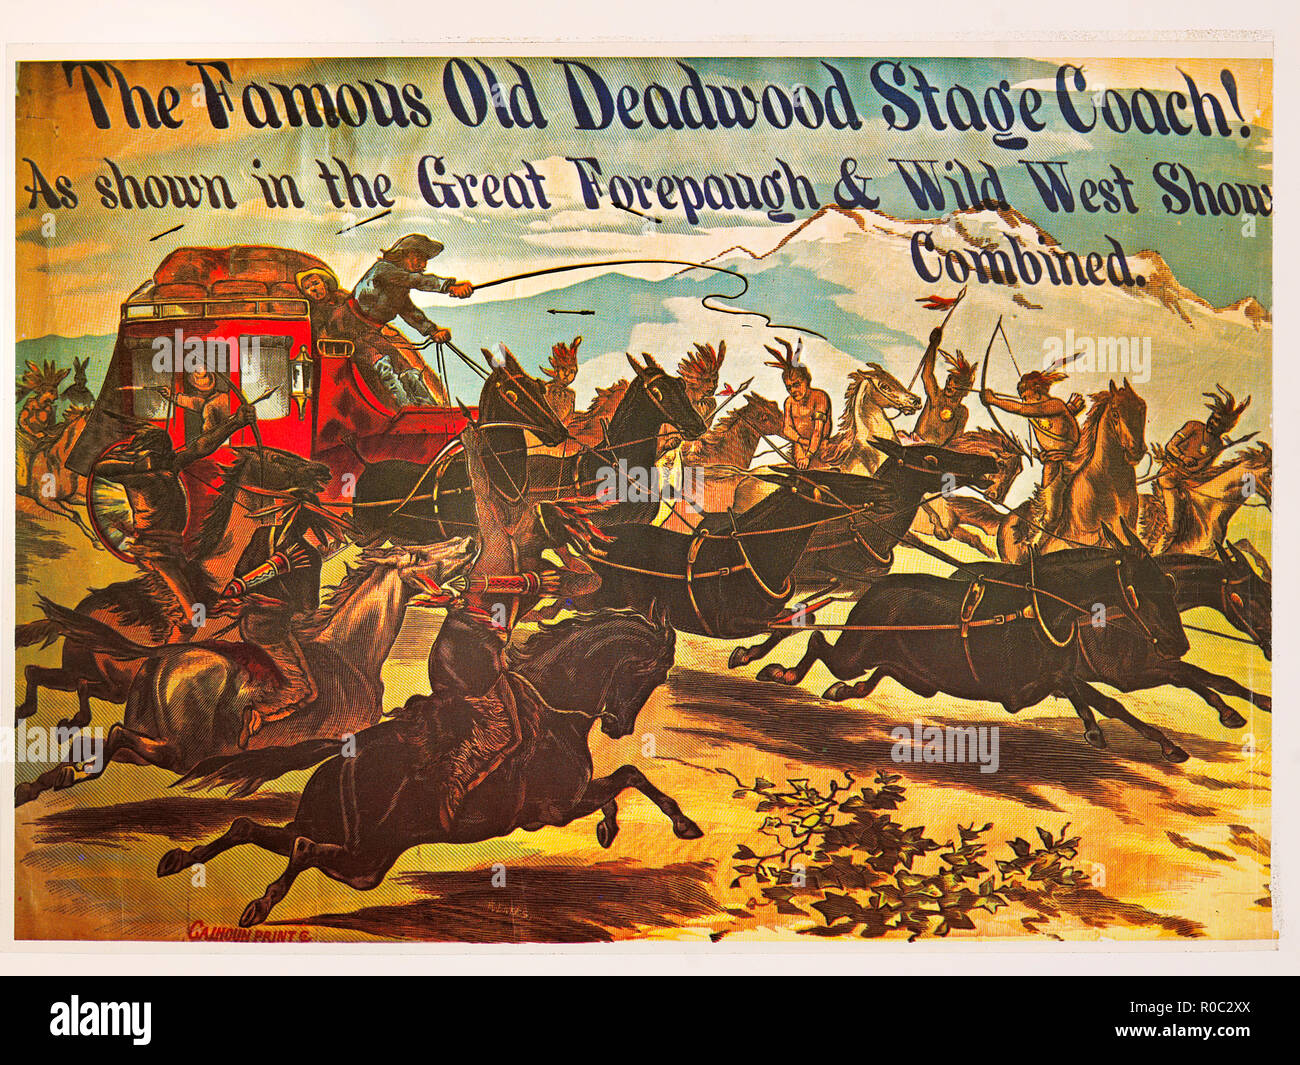 Die berühmten alten Deadwood Stage Coach! Wie gezeigt in der Großen Forepaugh & Wild West Zeigt kombiniert, Zirkus, Poster, Lithographie, 1880 Stockfoto